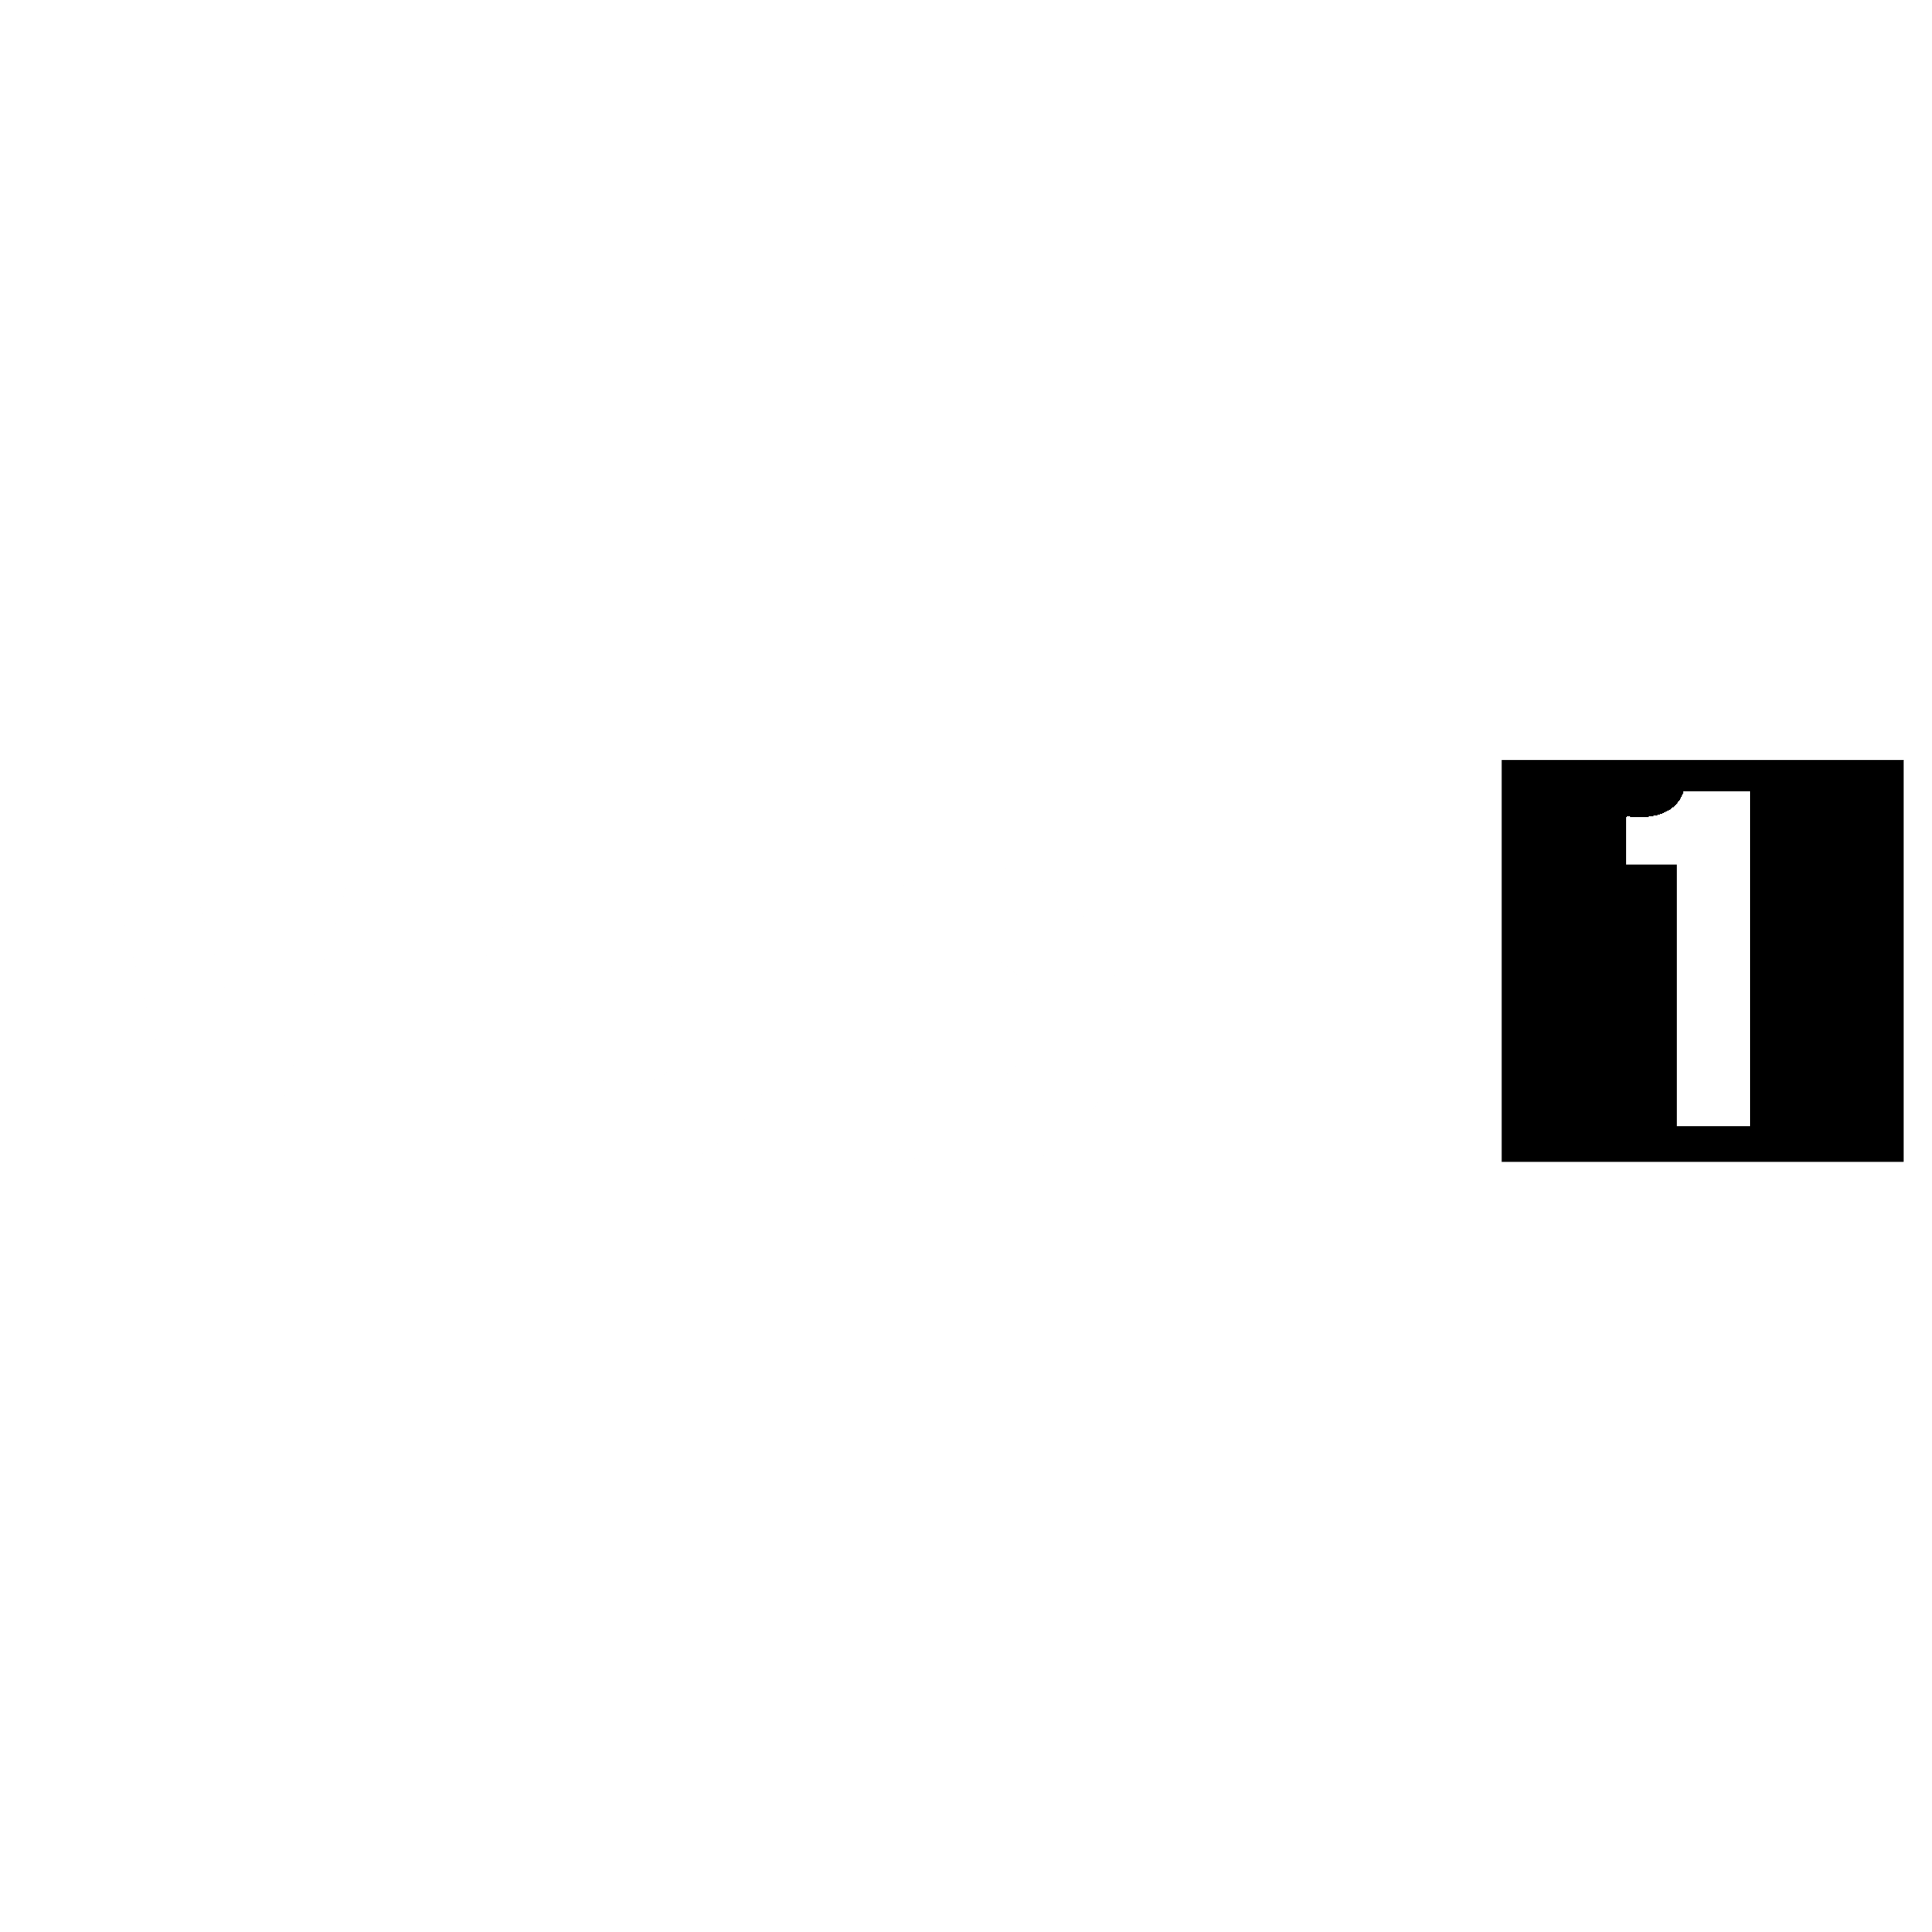 Black and White Mobil Logo - Mobil 1 Logo PNG Transparent & SVG Vector - Freebie Supply